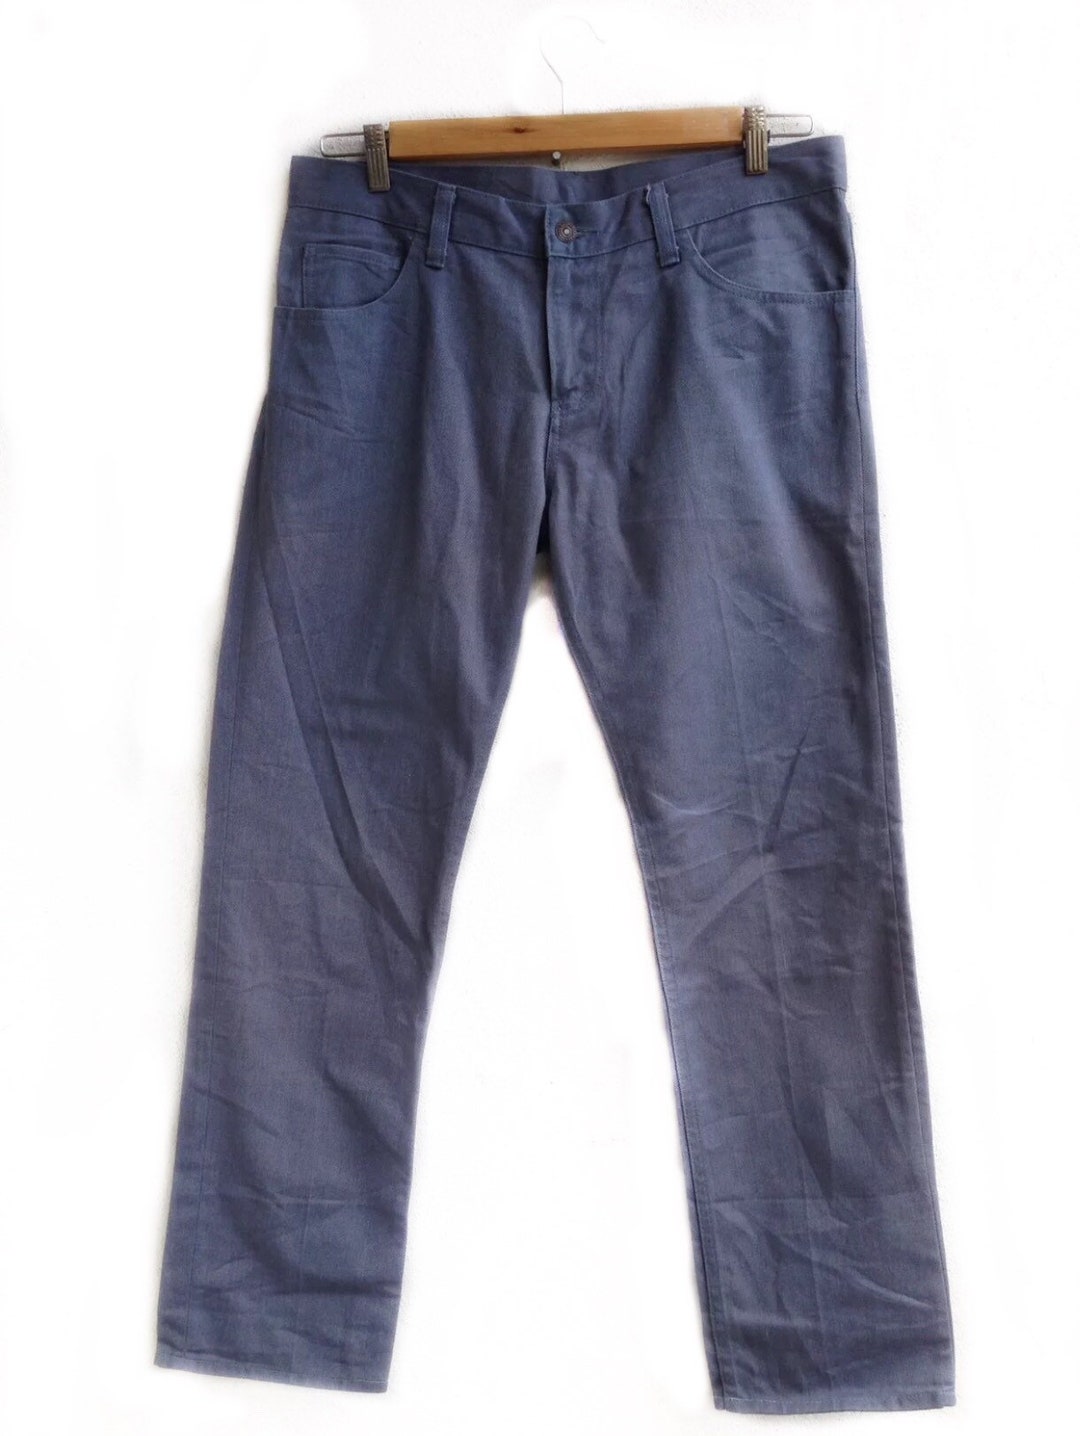 JOHNBULL Kojima Sewing Chop Japan Jeans Pant W34 L30 - Etsy